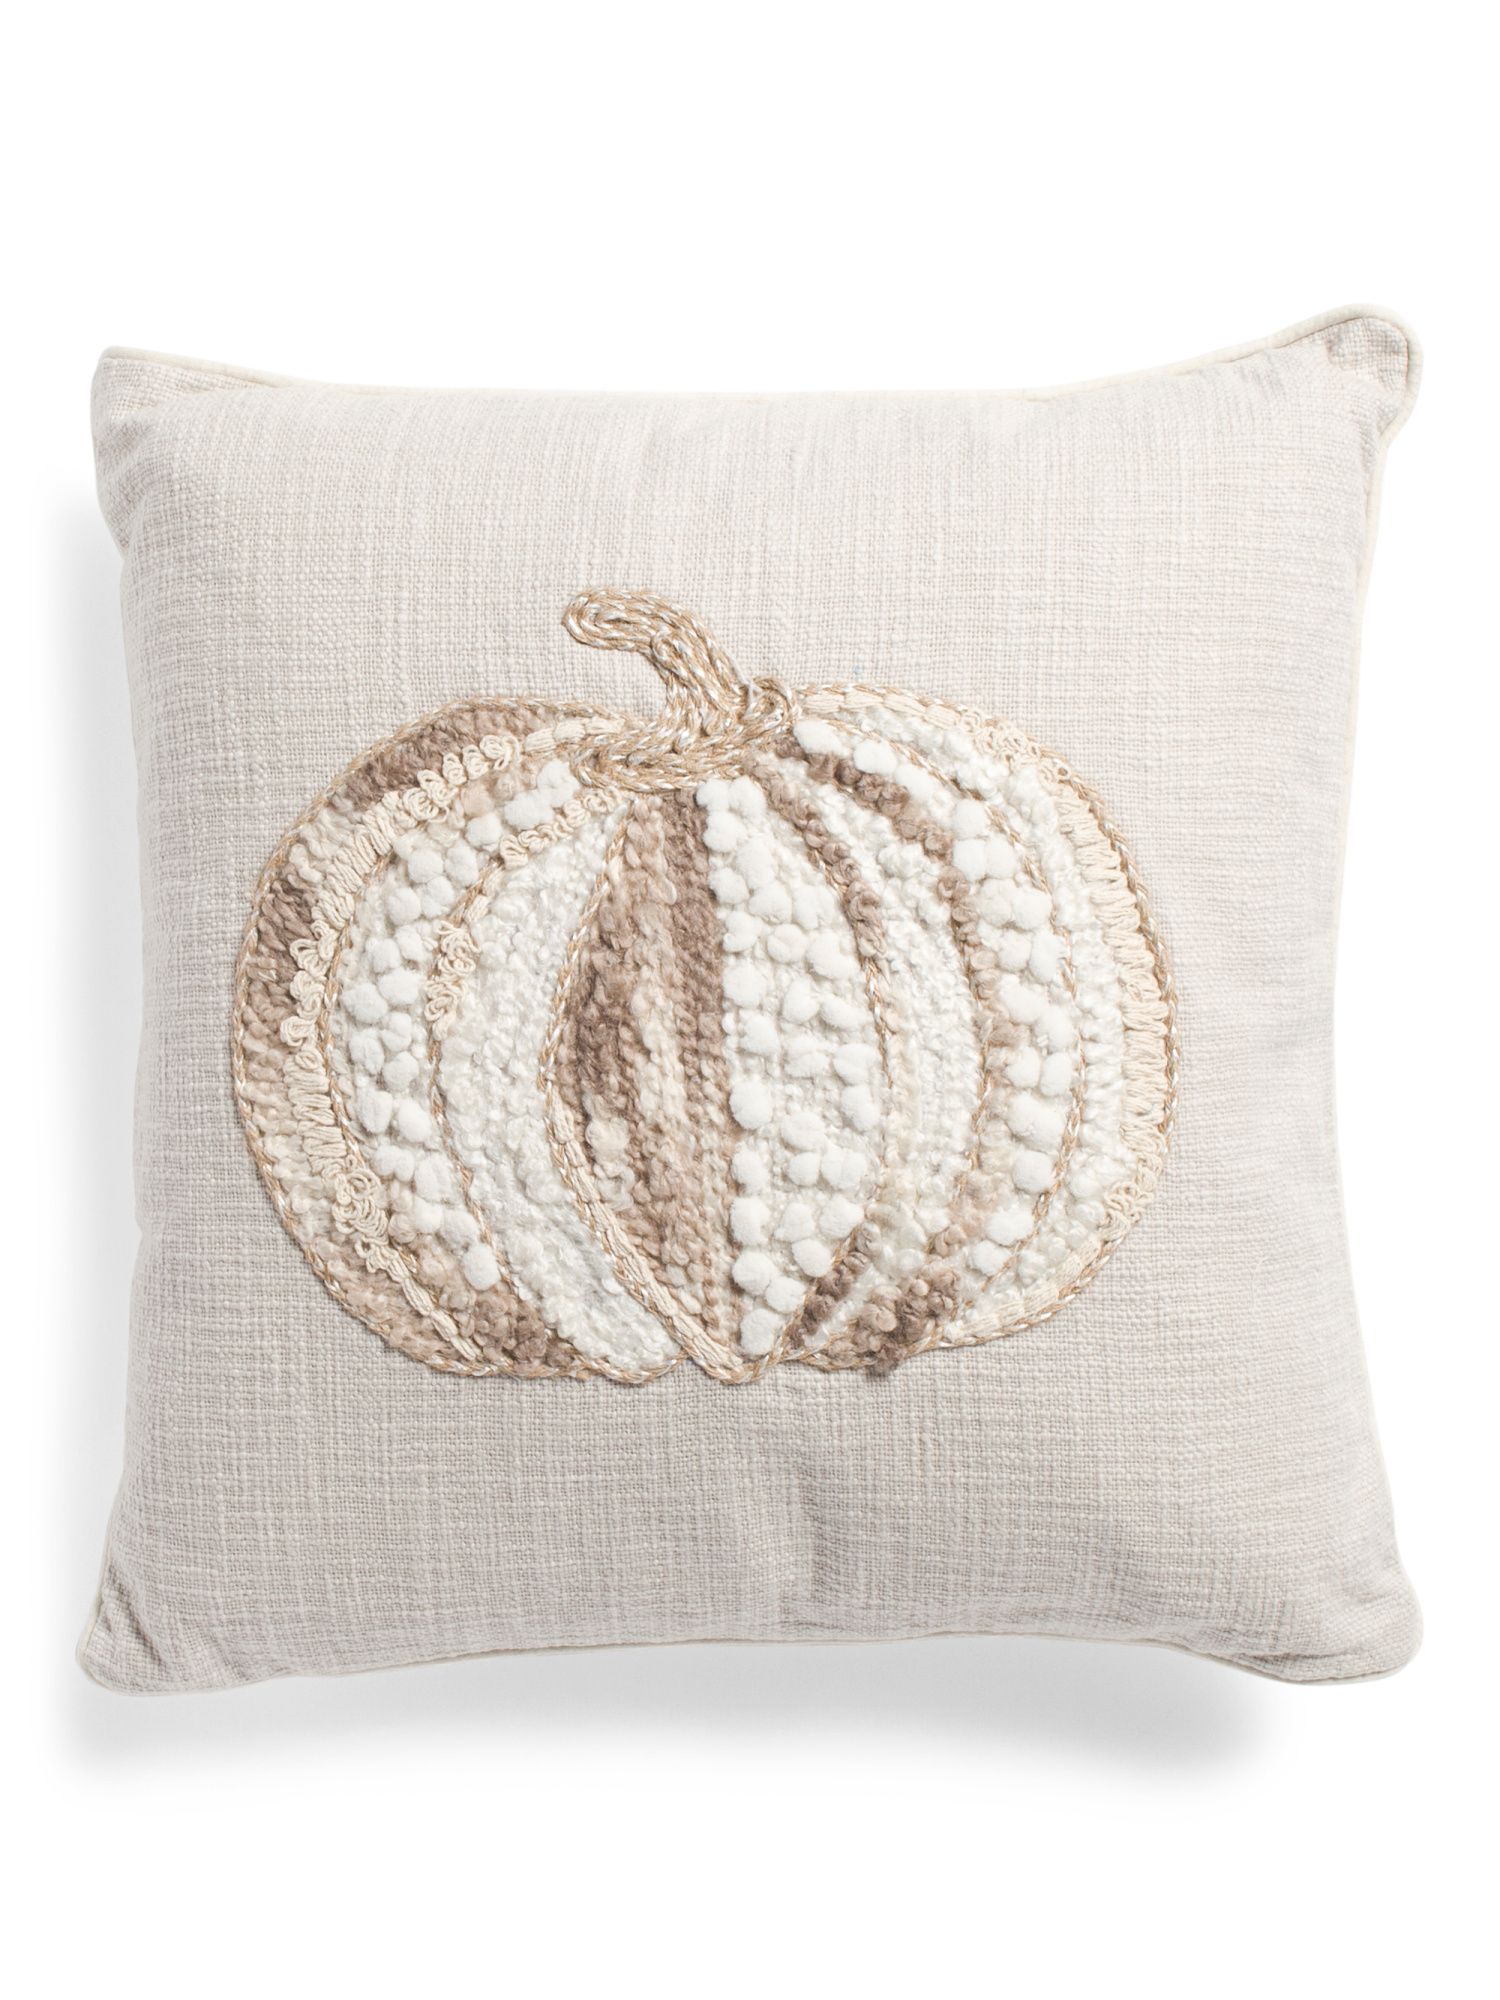 20x20 Embroidered Applique Pumpkin Pillow | TJ Maxx